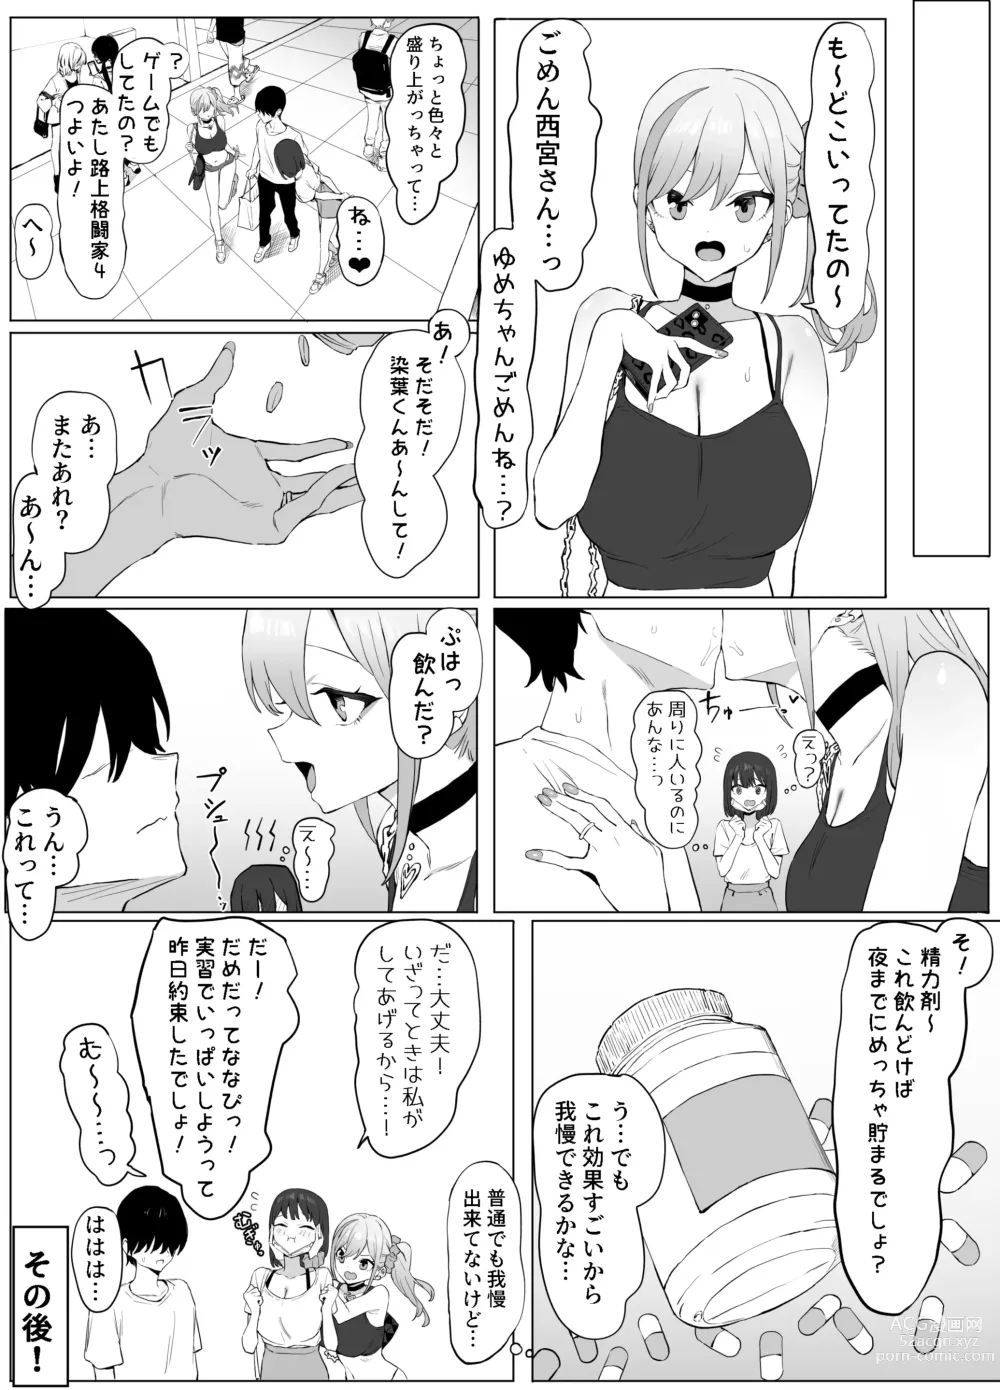 Page 15 of doujinshi Seikoui Jisshuu 2